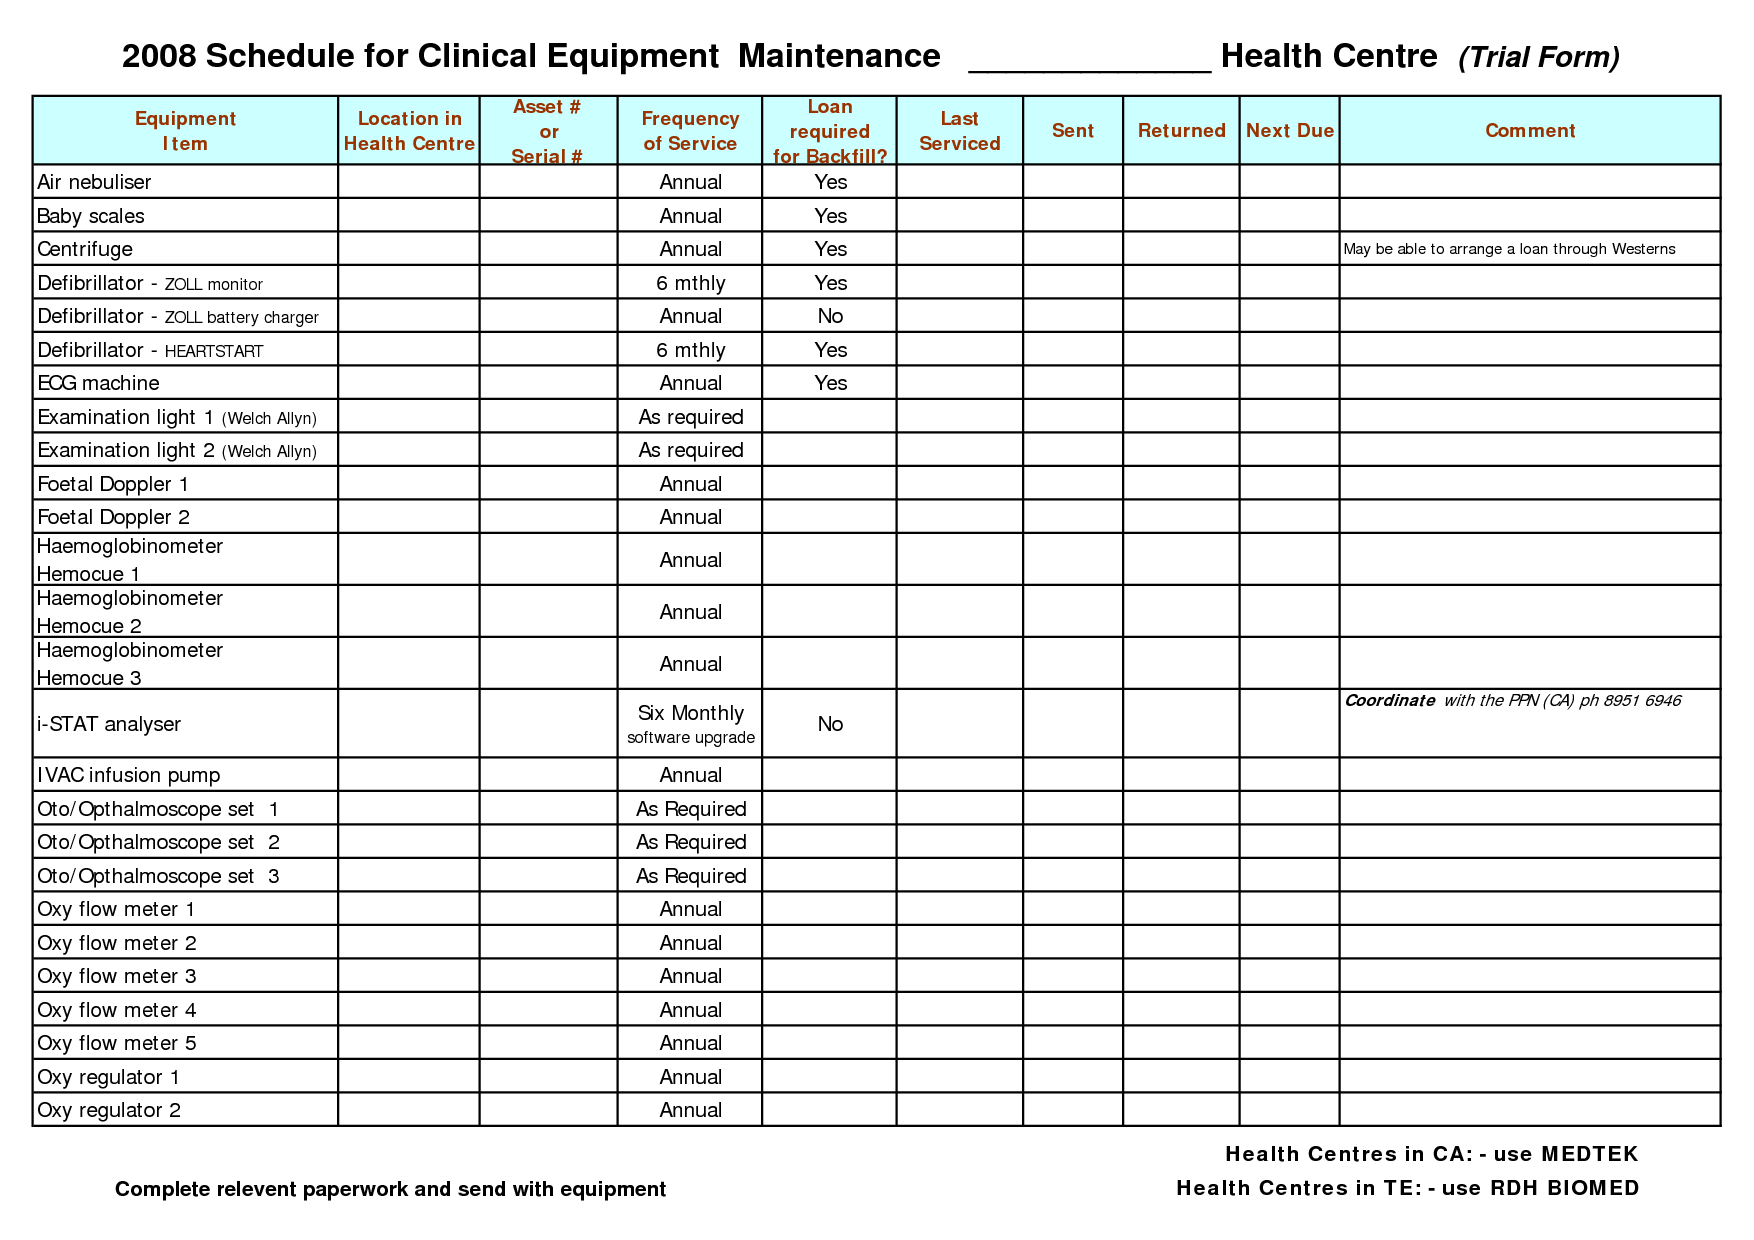 Clinical Equipment Maintenance Template And Form Example : V m d.com